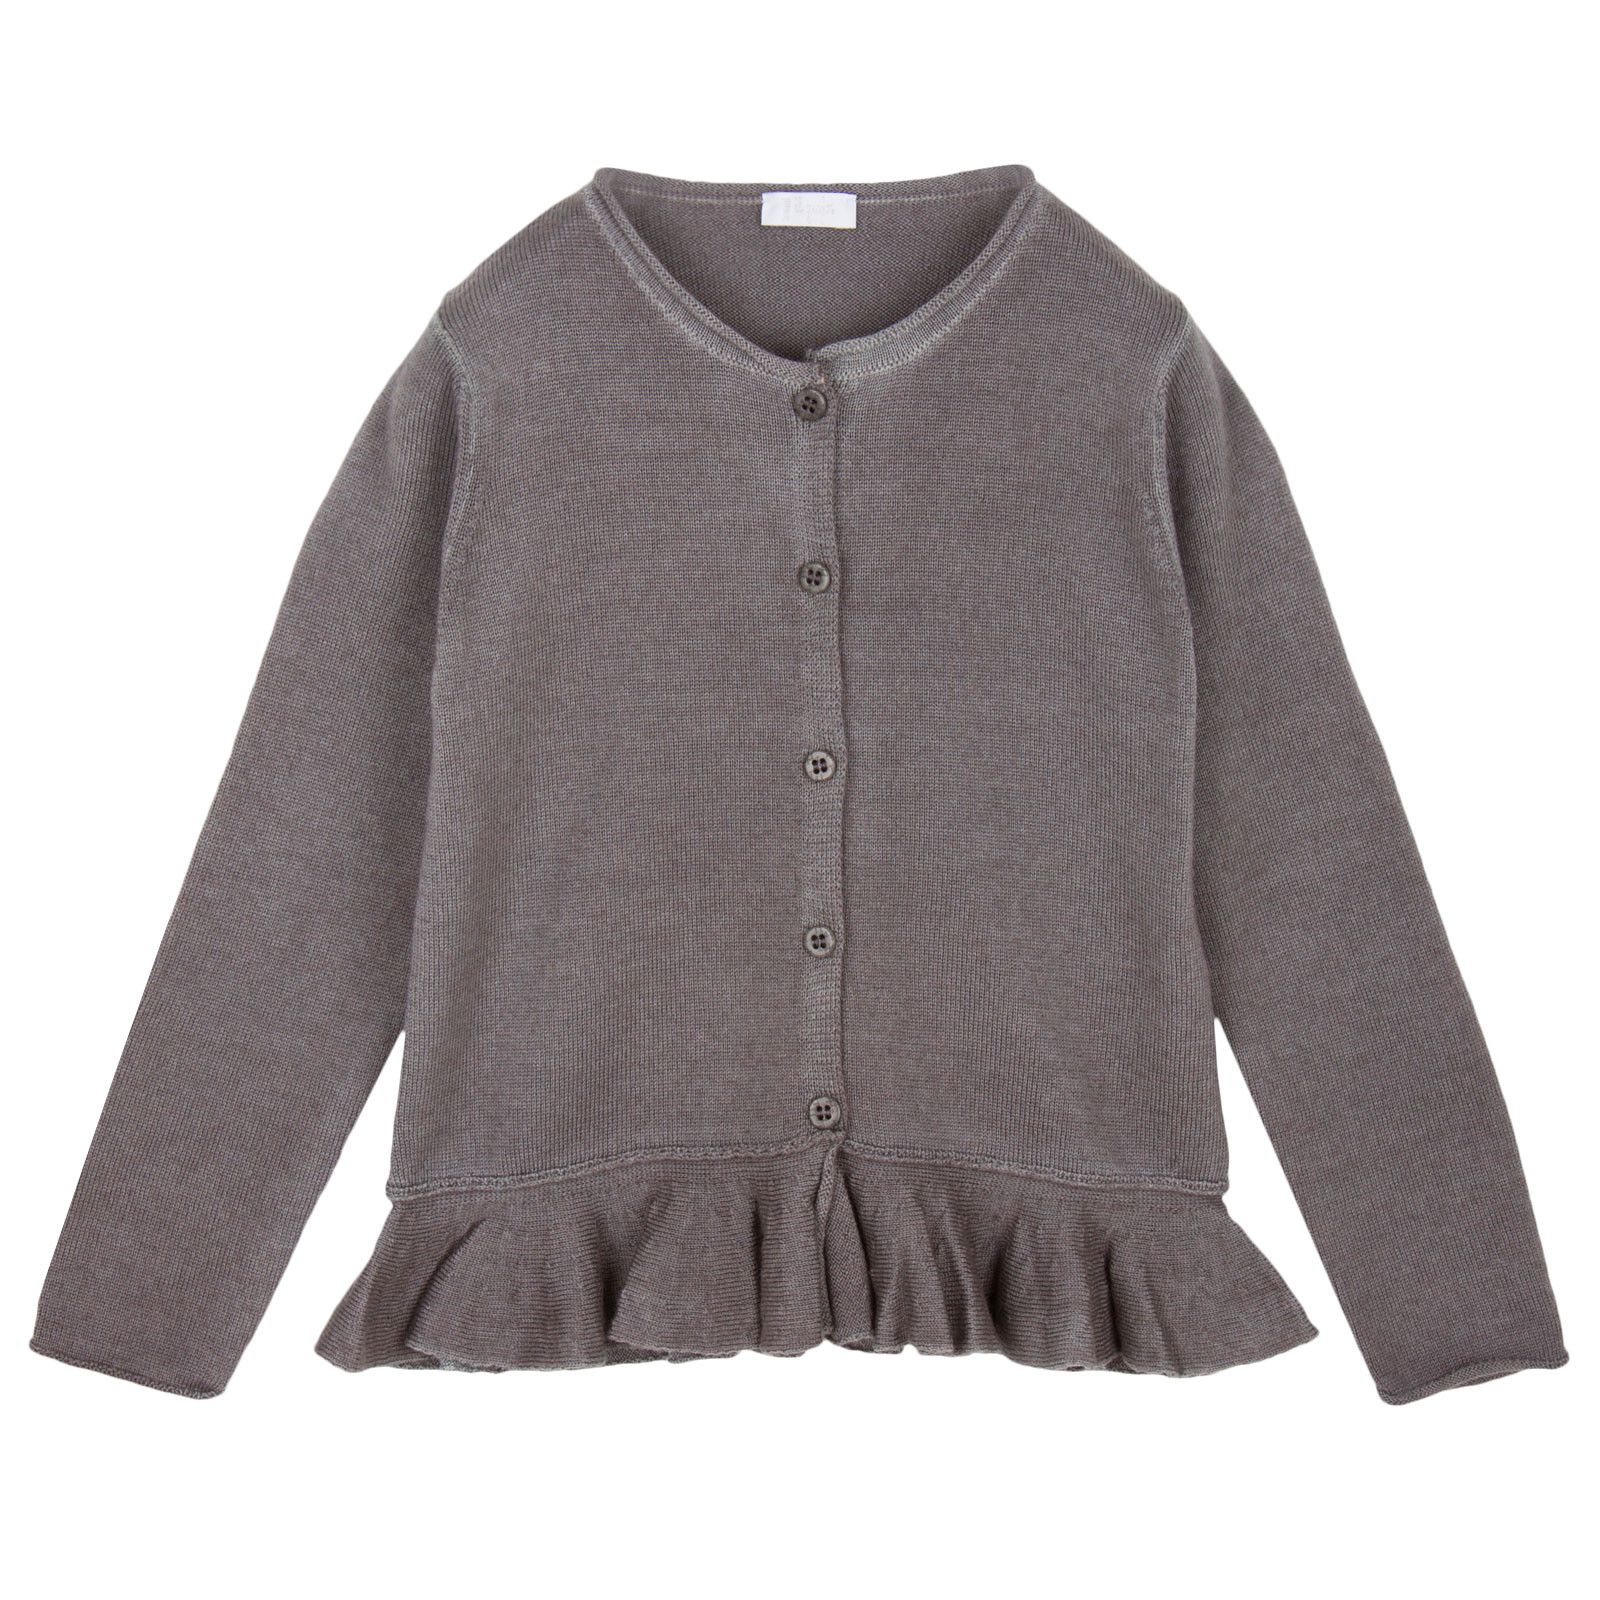 Girls Dark Grey Knitted Cardigan With Peplum Hem - CÉMAROSE | Children's Fashion Store - 1